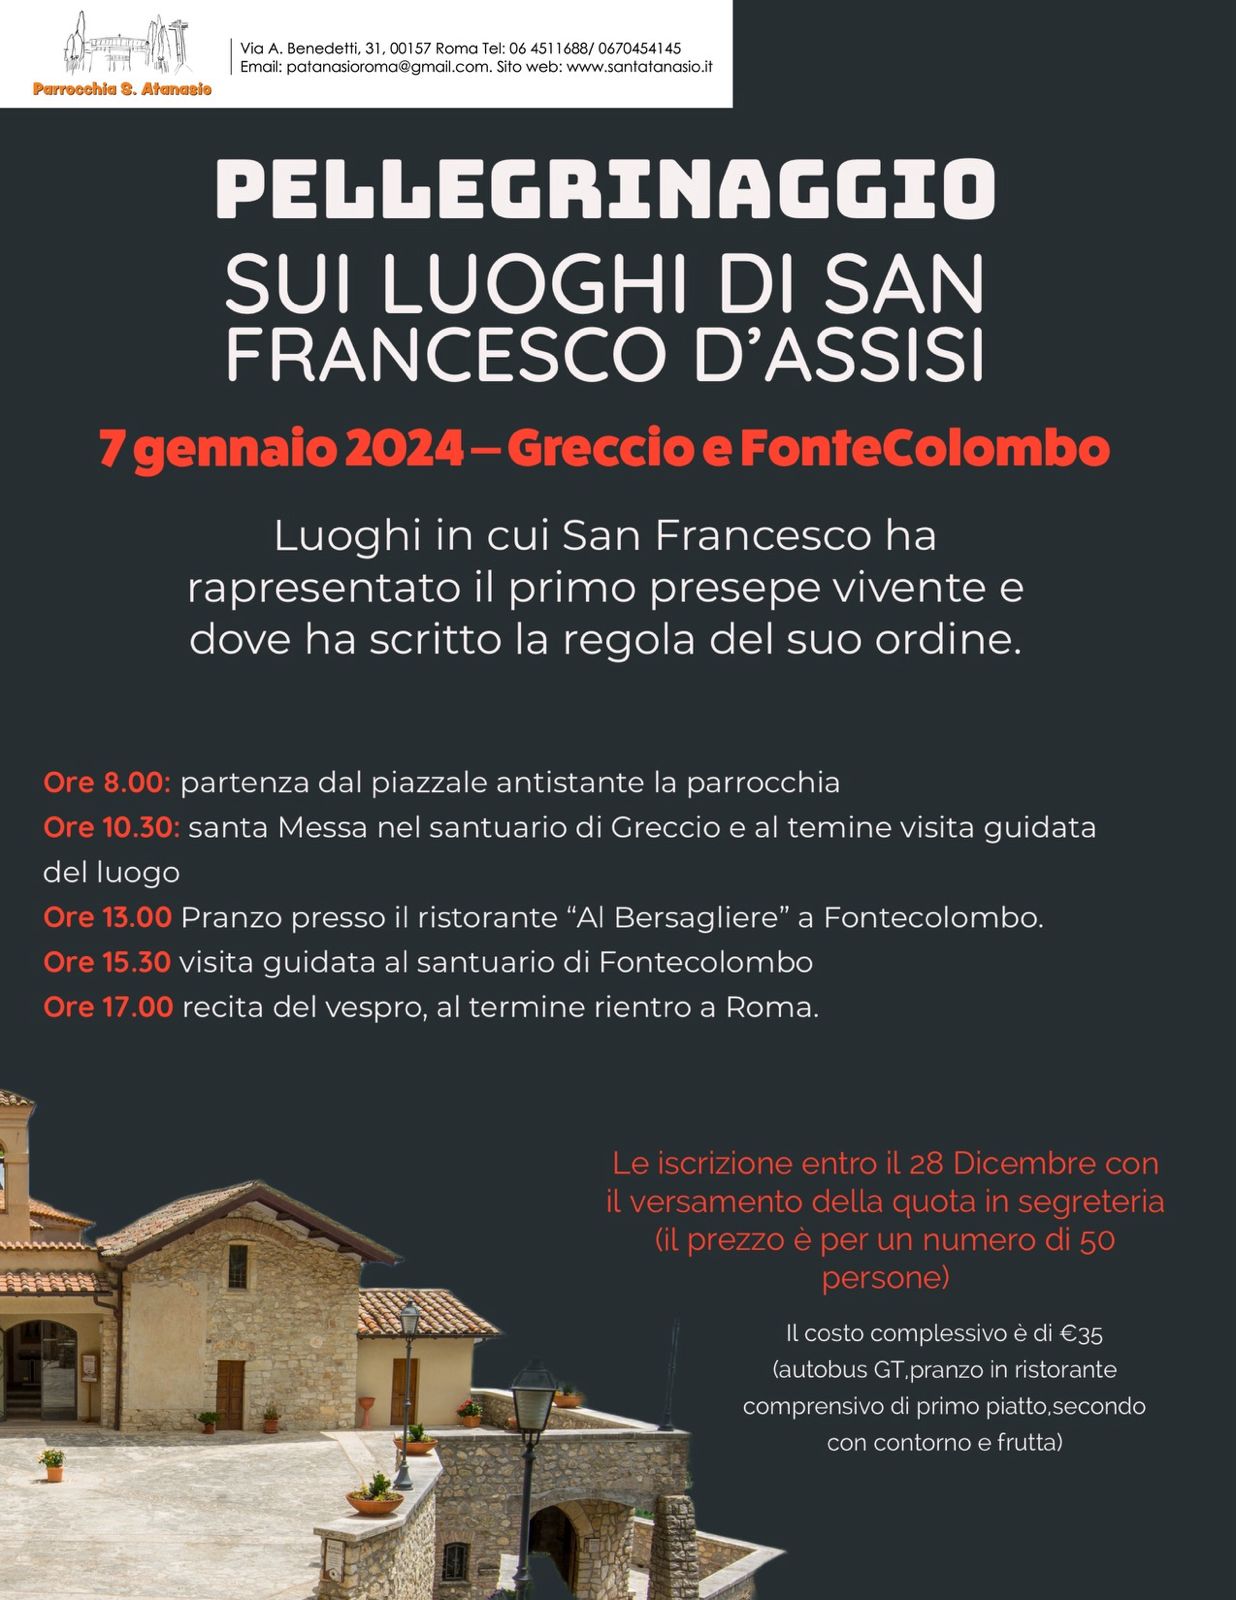 Pellegrinaggio sui luoghi di S. Francesco d’Assisi – 7 gennaio